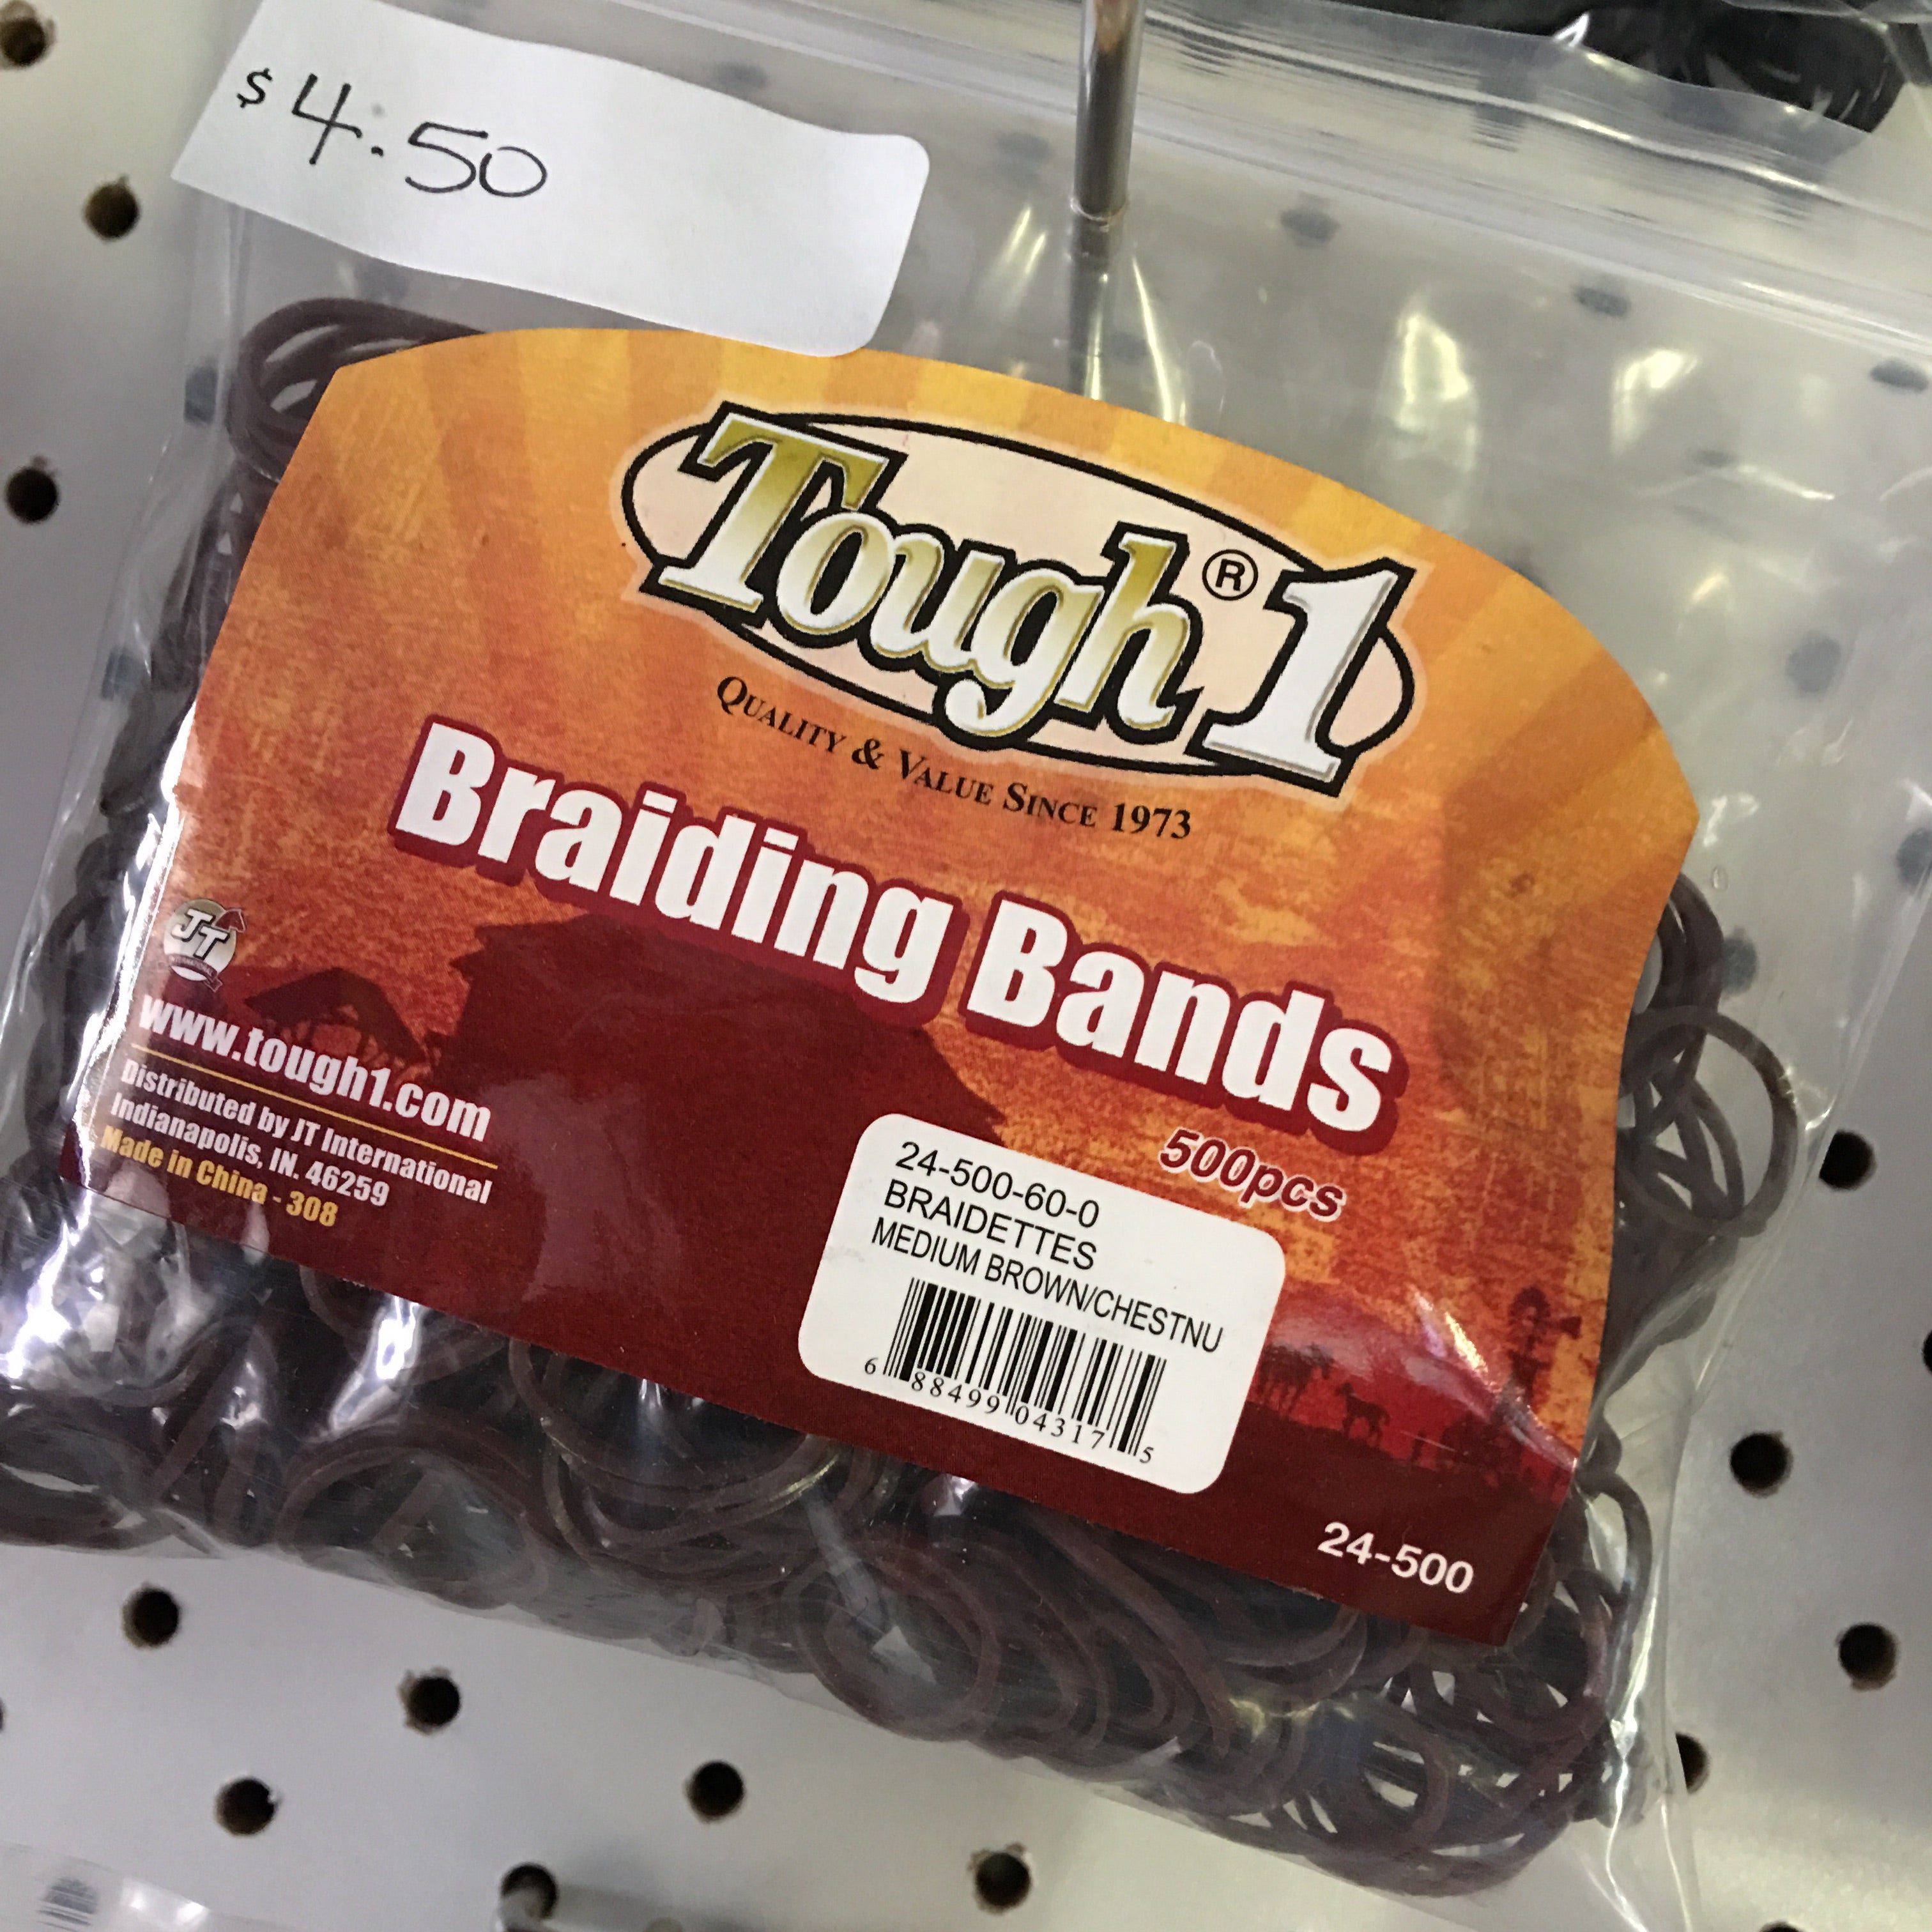 Tough-1 Braiding/Banding Bands